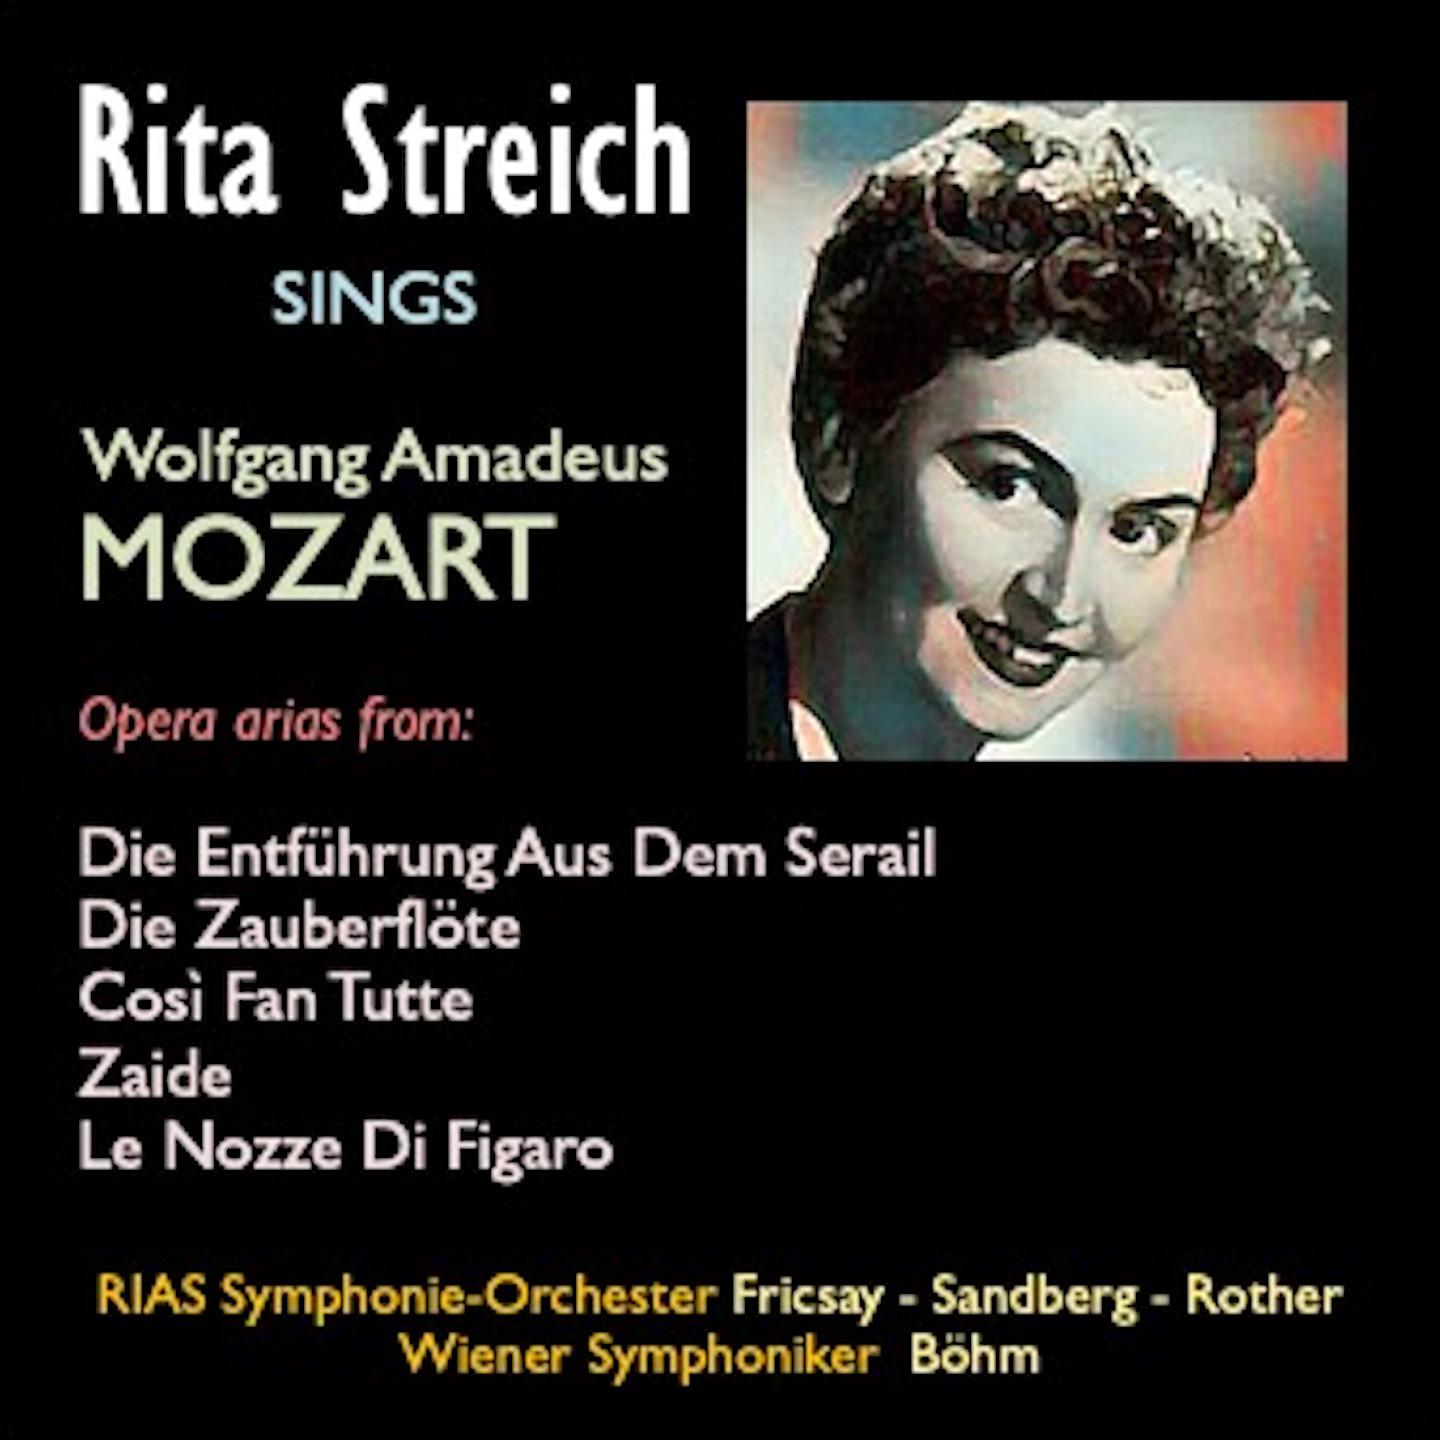 Постер альбома Rita Streich sings Mozart Opera Arias 2